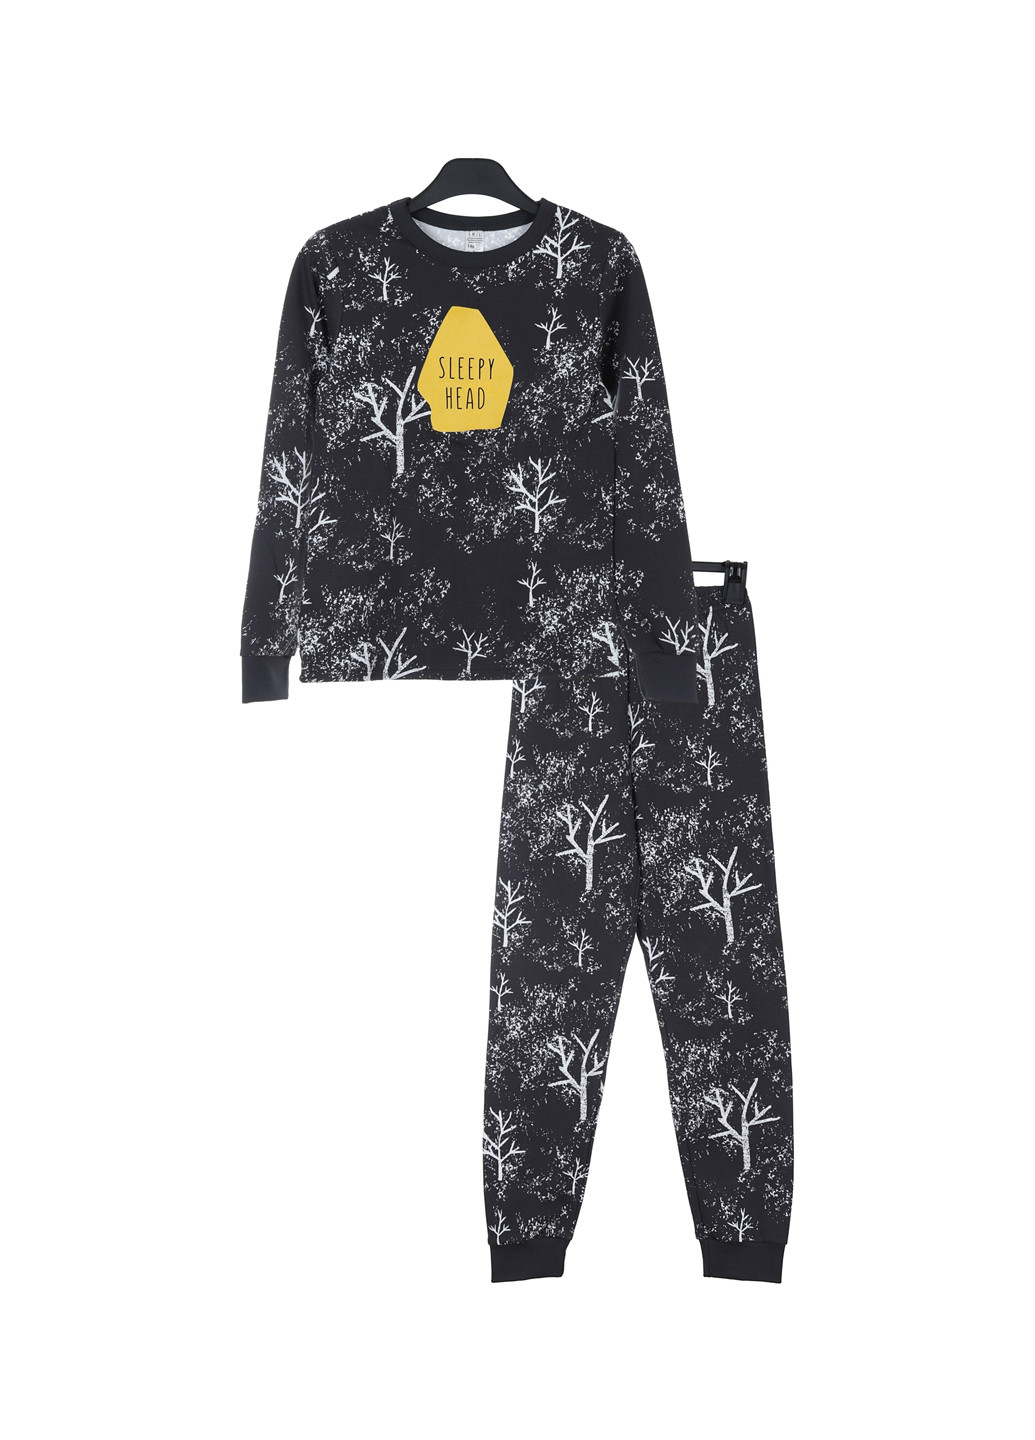 Темно-серая всесезон пижама (свитшот, брюки) свитшот + брюки Smil